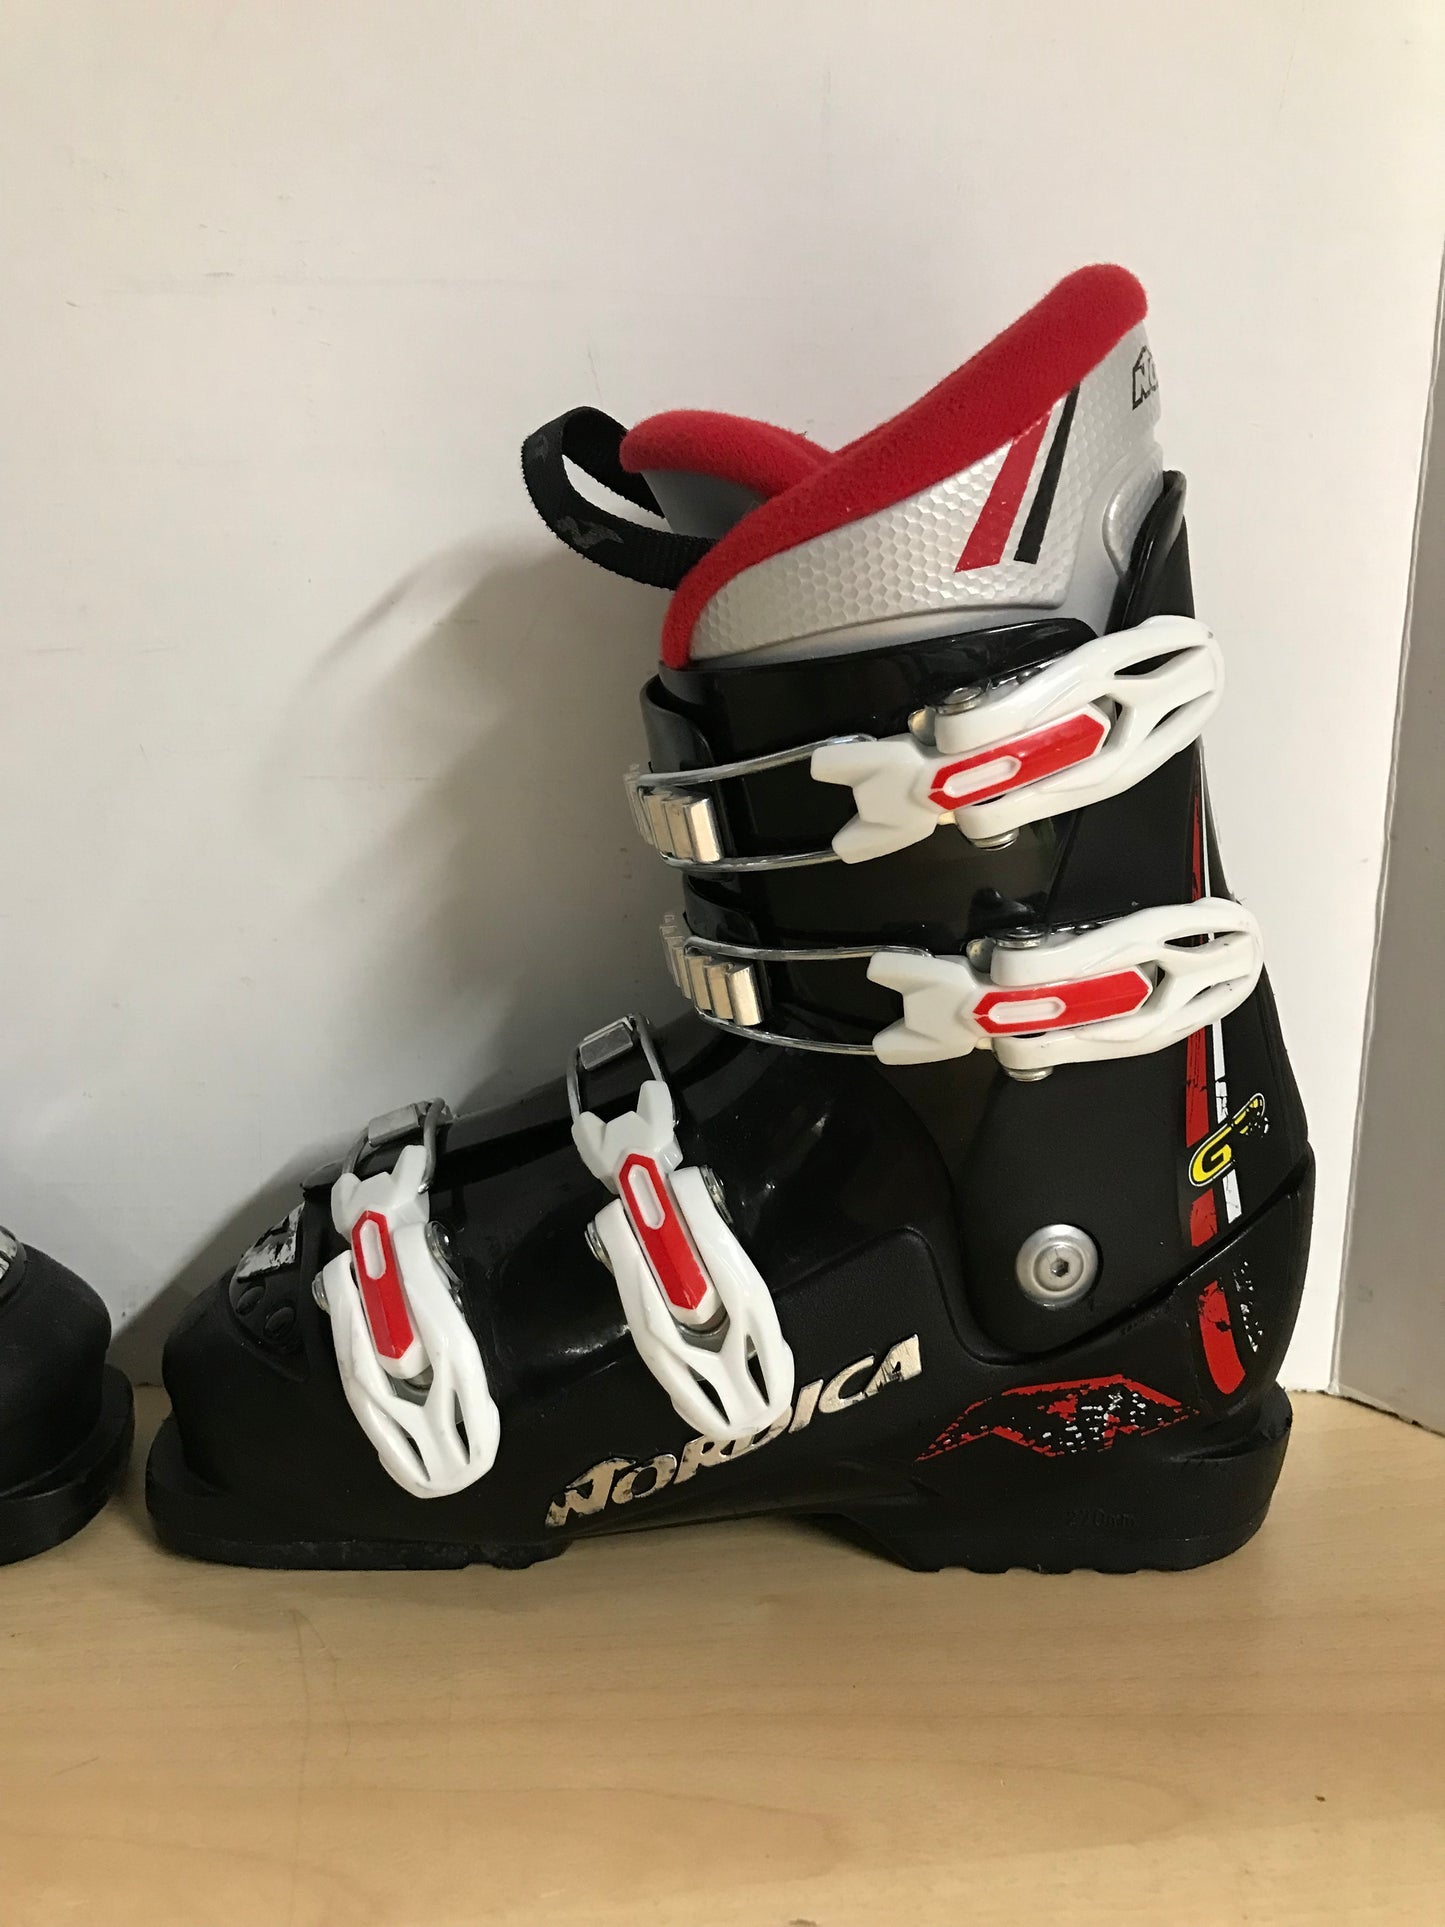 Ski Boots Mondo Size 23.5  Child Size 5-6 270 mm Nordica Black Red White Nice